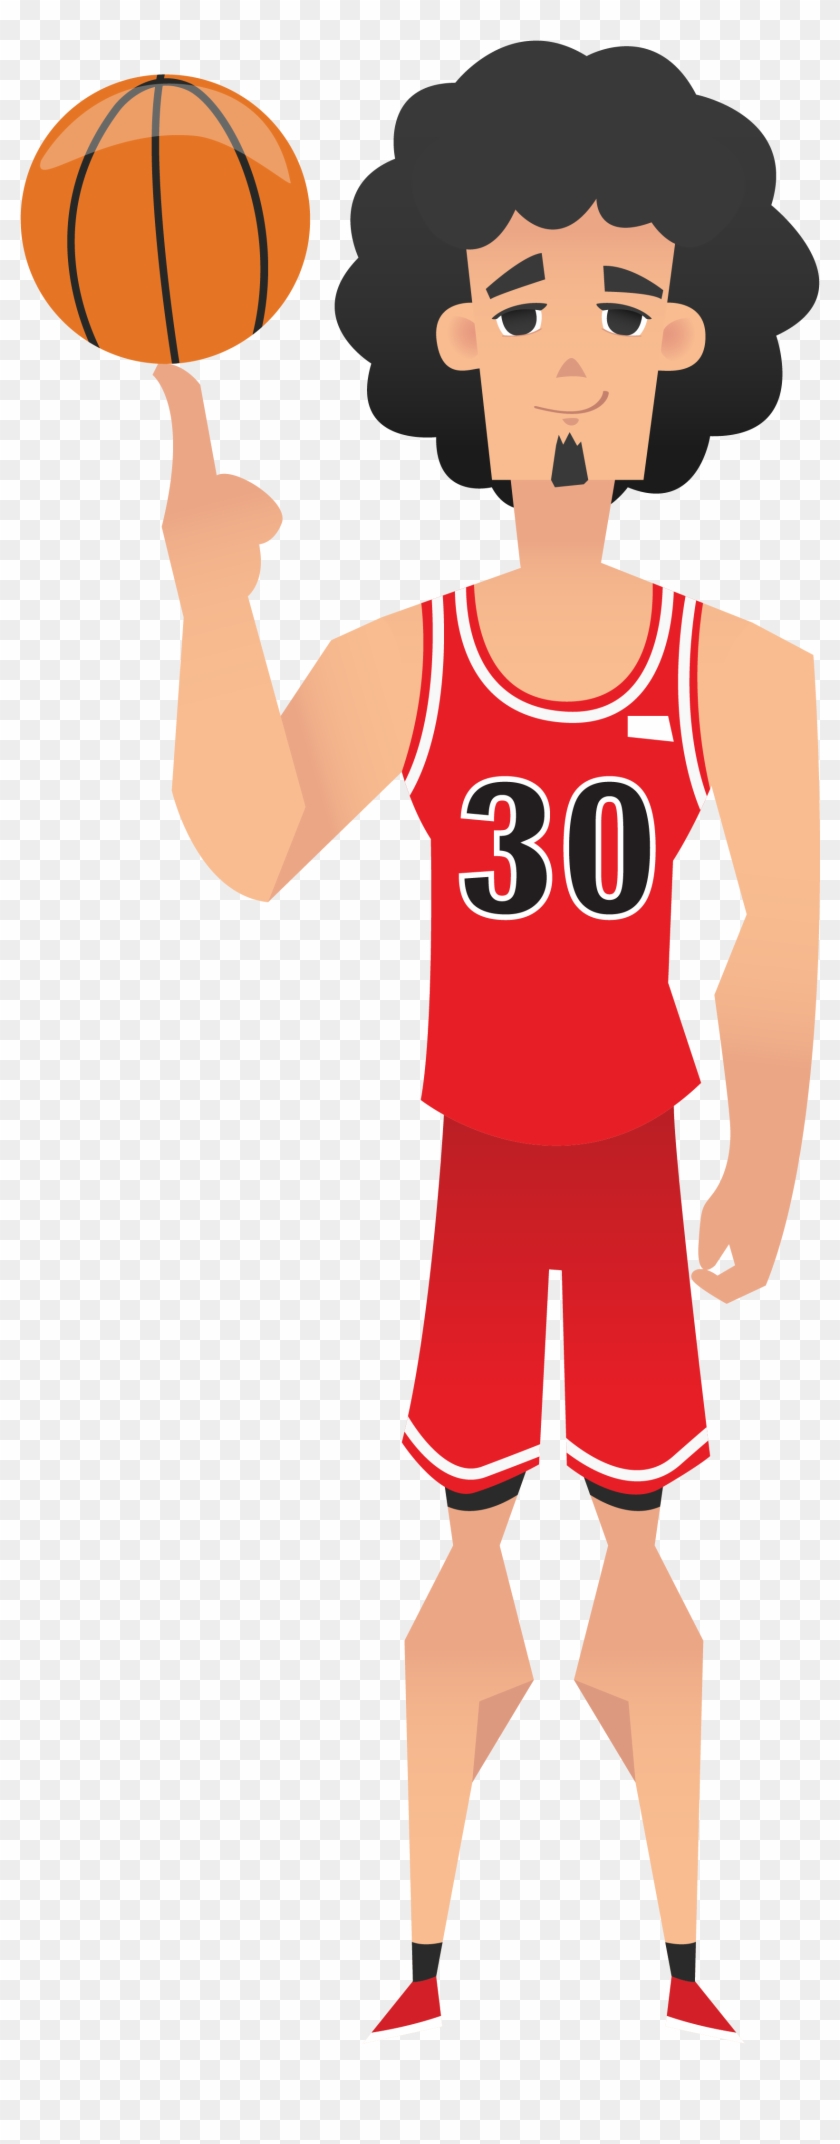 Baloncesto De La Nba Jugador De Dibujos Animados - Basketball Player Cartoon Png #800861